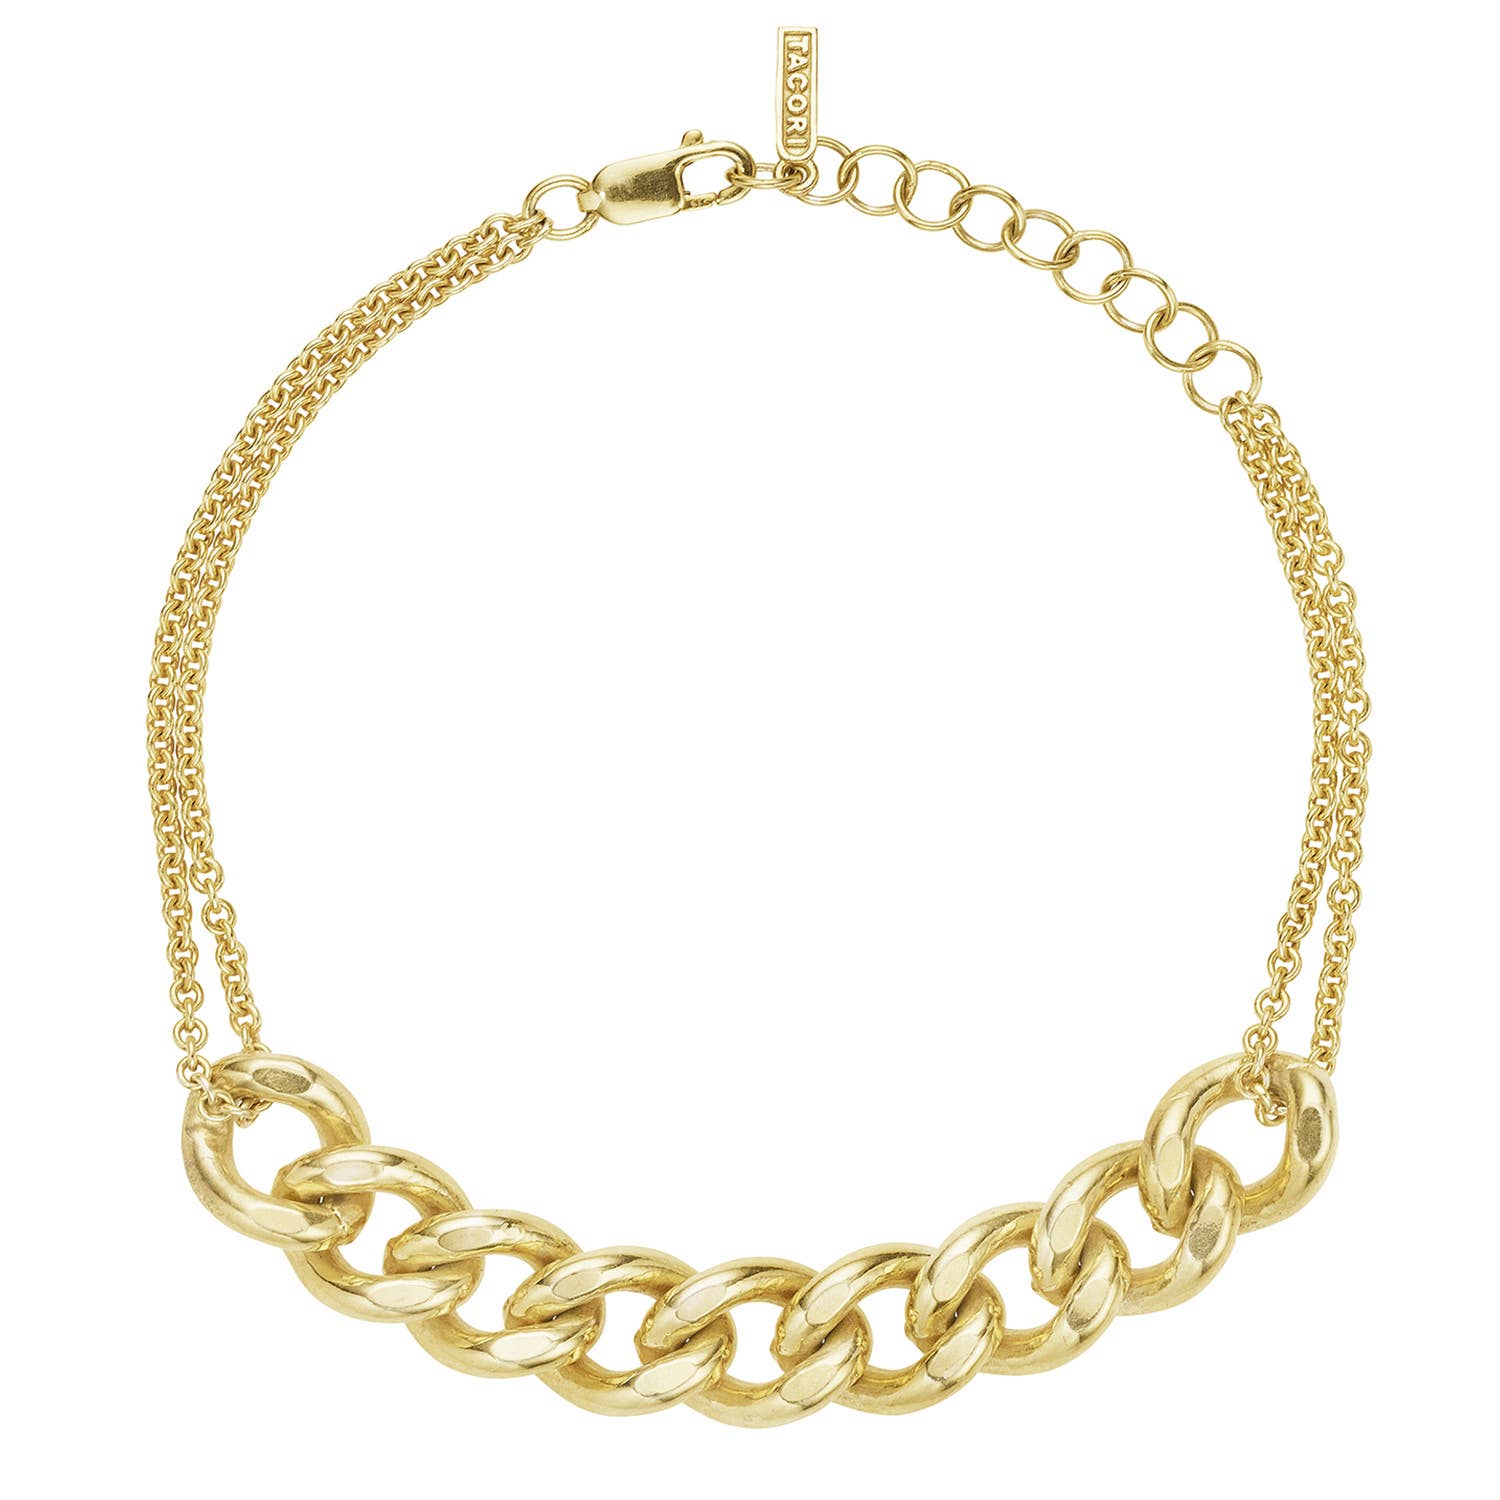 The Curb Chain Bracelet